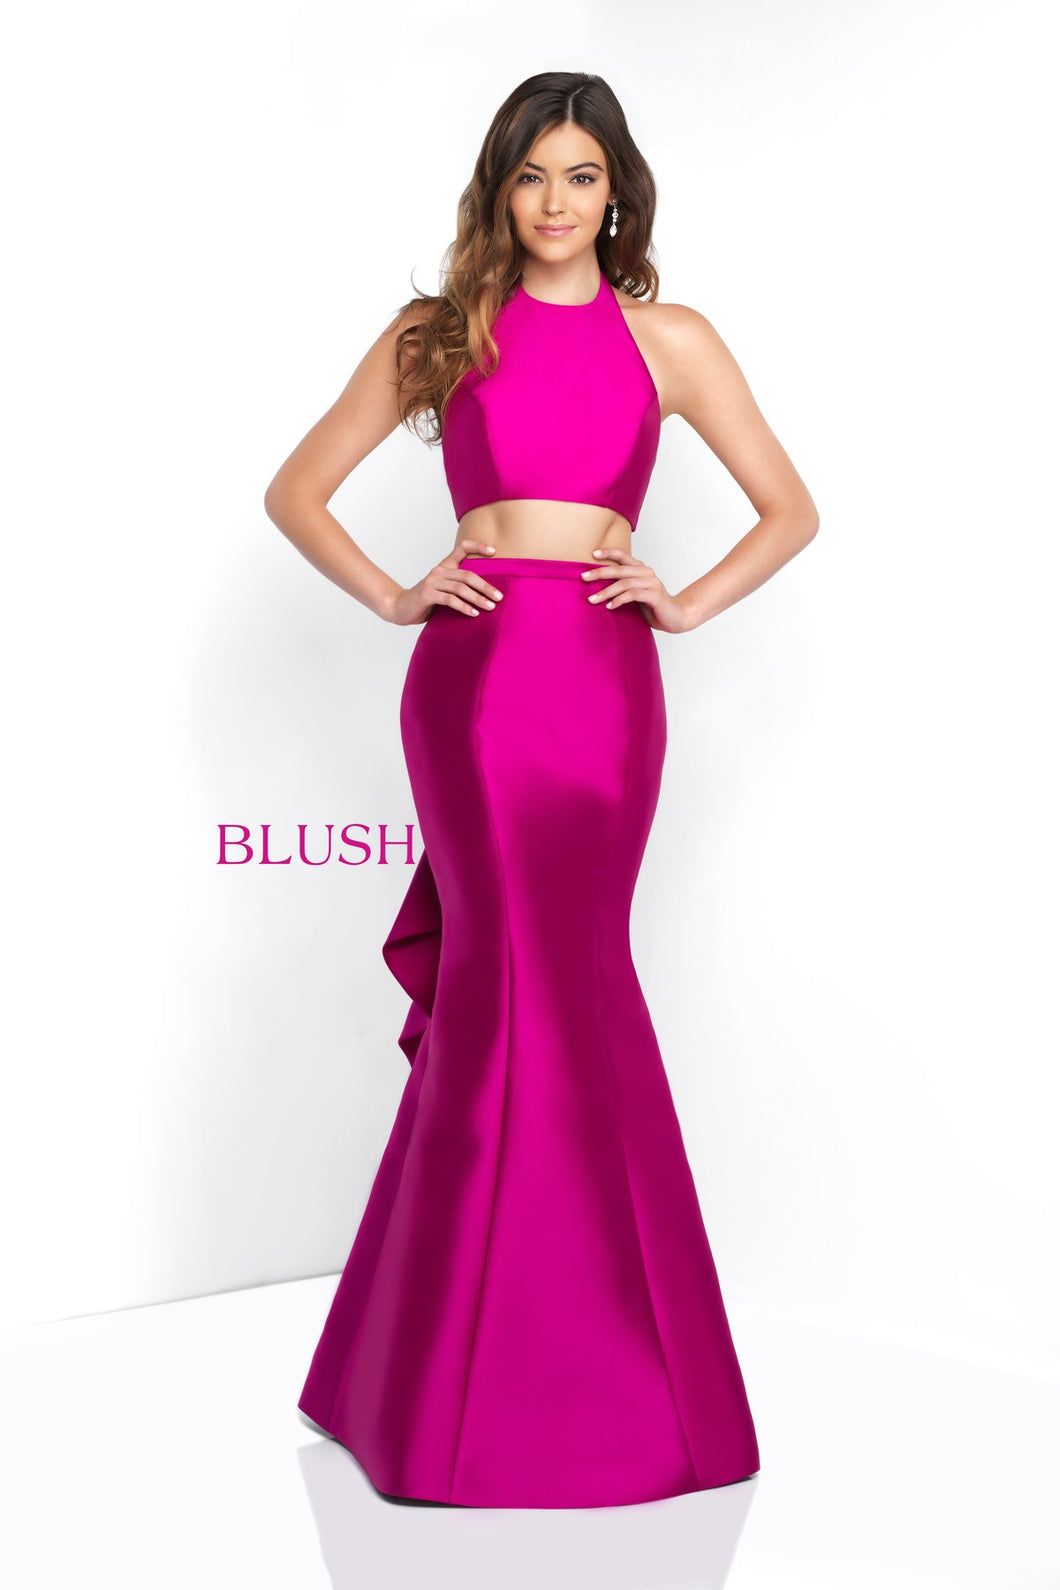 Blush Prom 2pc hot pink satin twill halter & long skirt